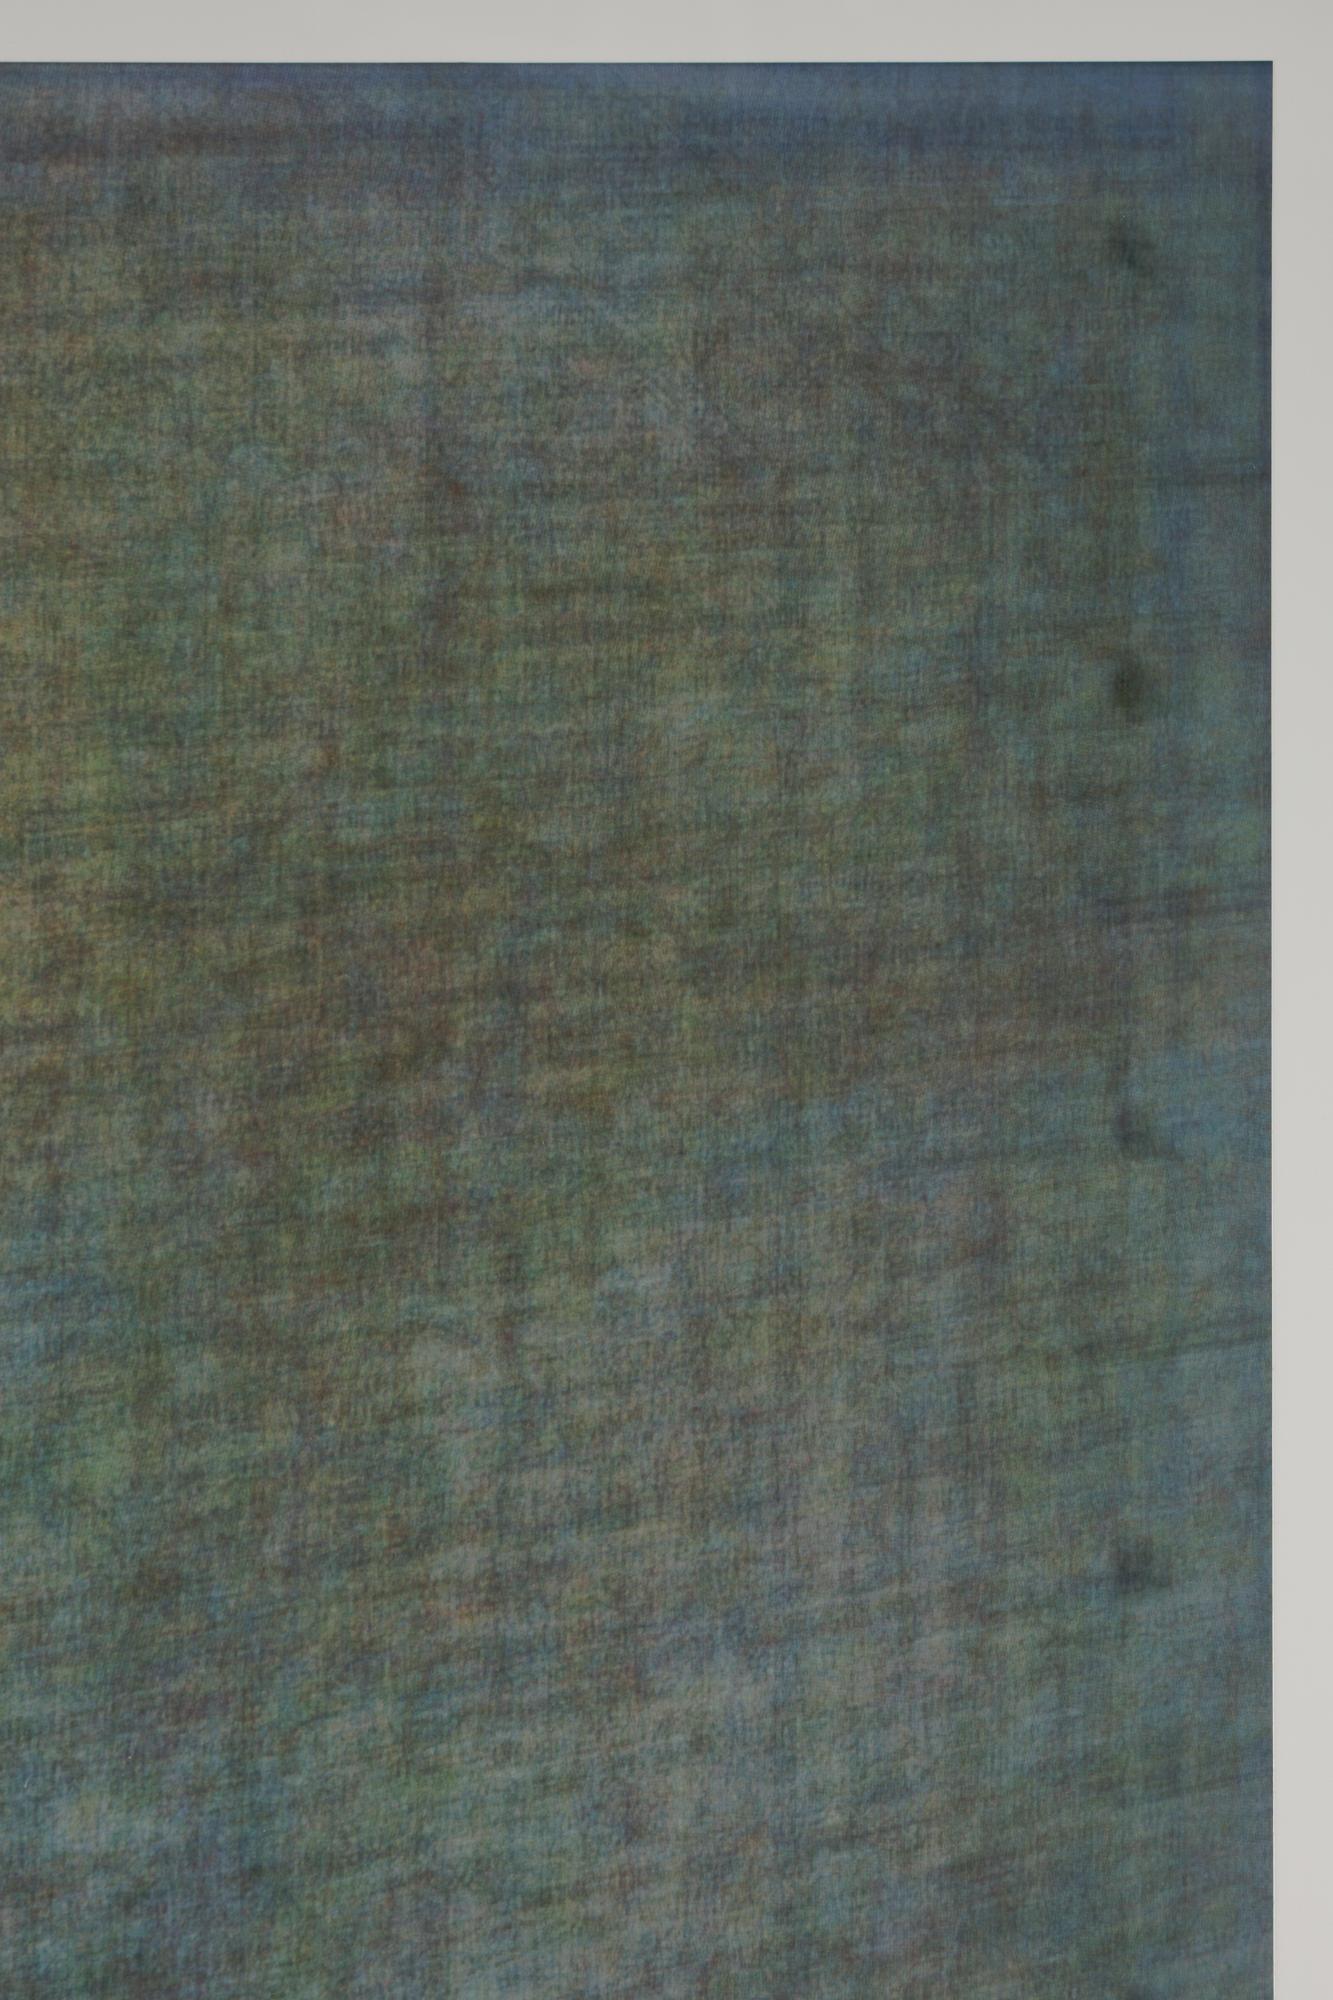 Tom Friedman
Untitled (Road Maps), 2005
Lambda print
Image Dimensions: 40 1/4 x 31 1/4 inches  (102.2 x 79.4 cm)
Framed Dimensions: 45 1/8 x 36 1/4 x 2 inches  (114.6 x 92.1 x 5.1 cm)
Edition 2/5